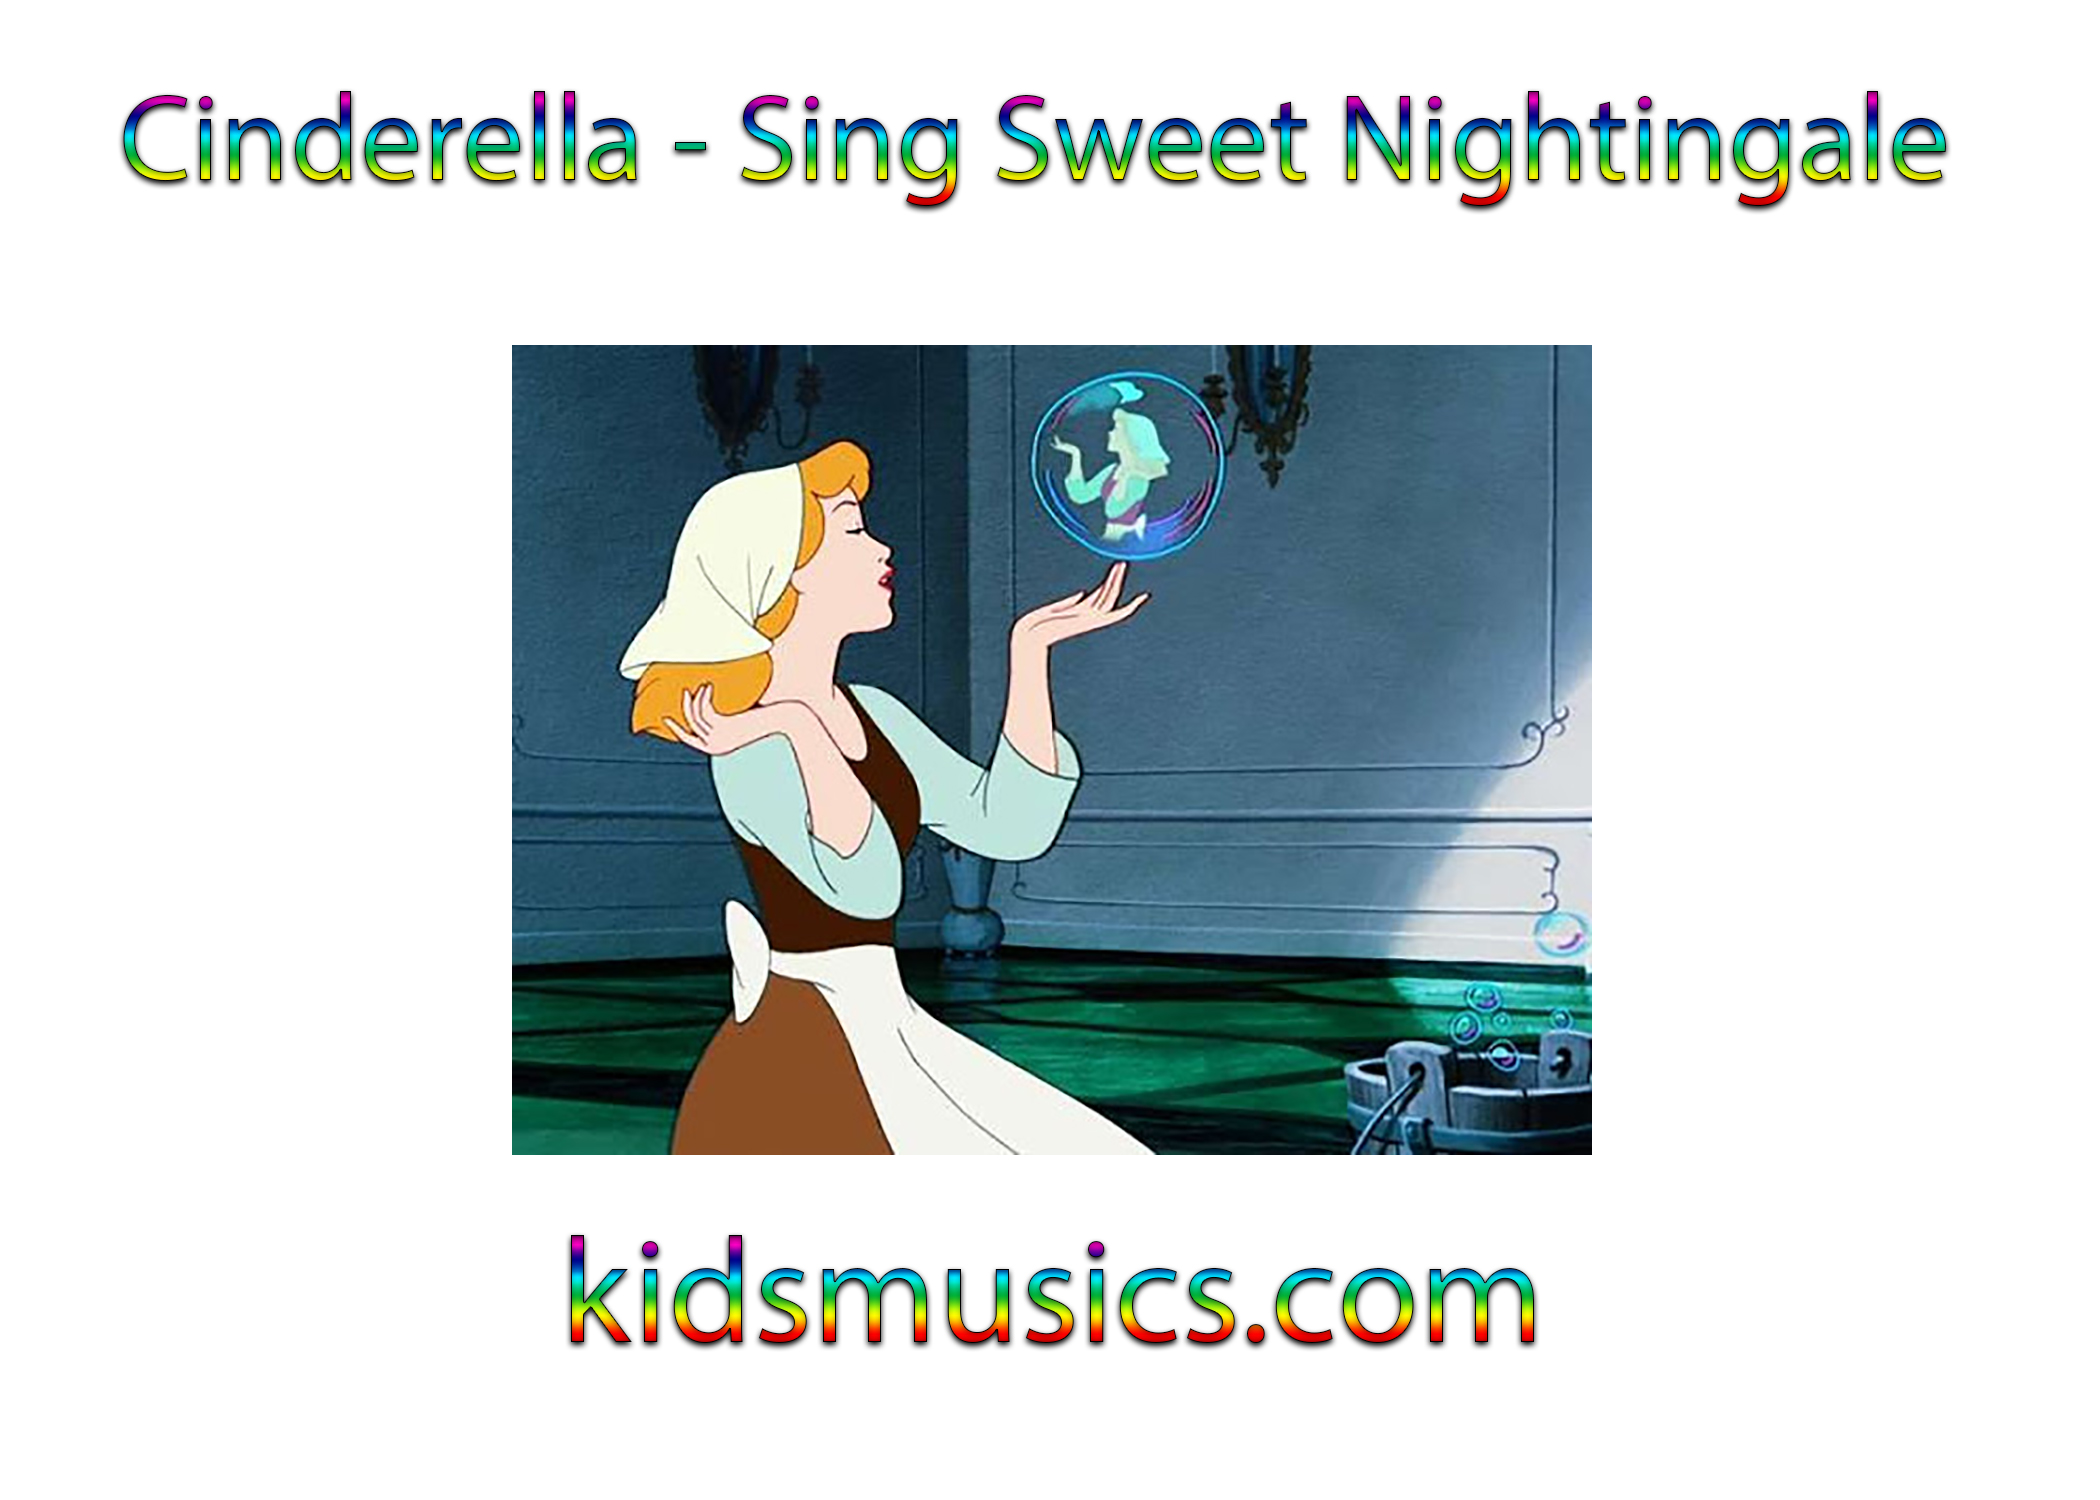 Kidsmusics Download Cinderella Sing Sweet Nightingale Free Mp3 Zip Archive Flac